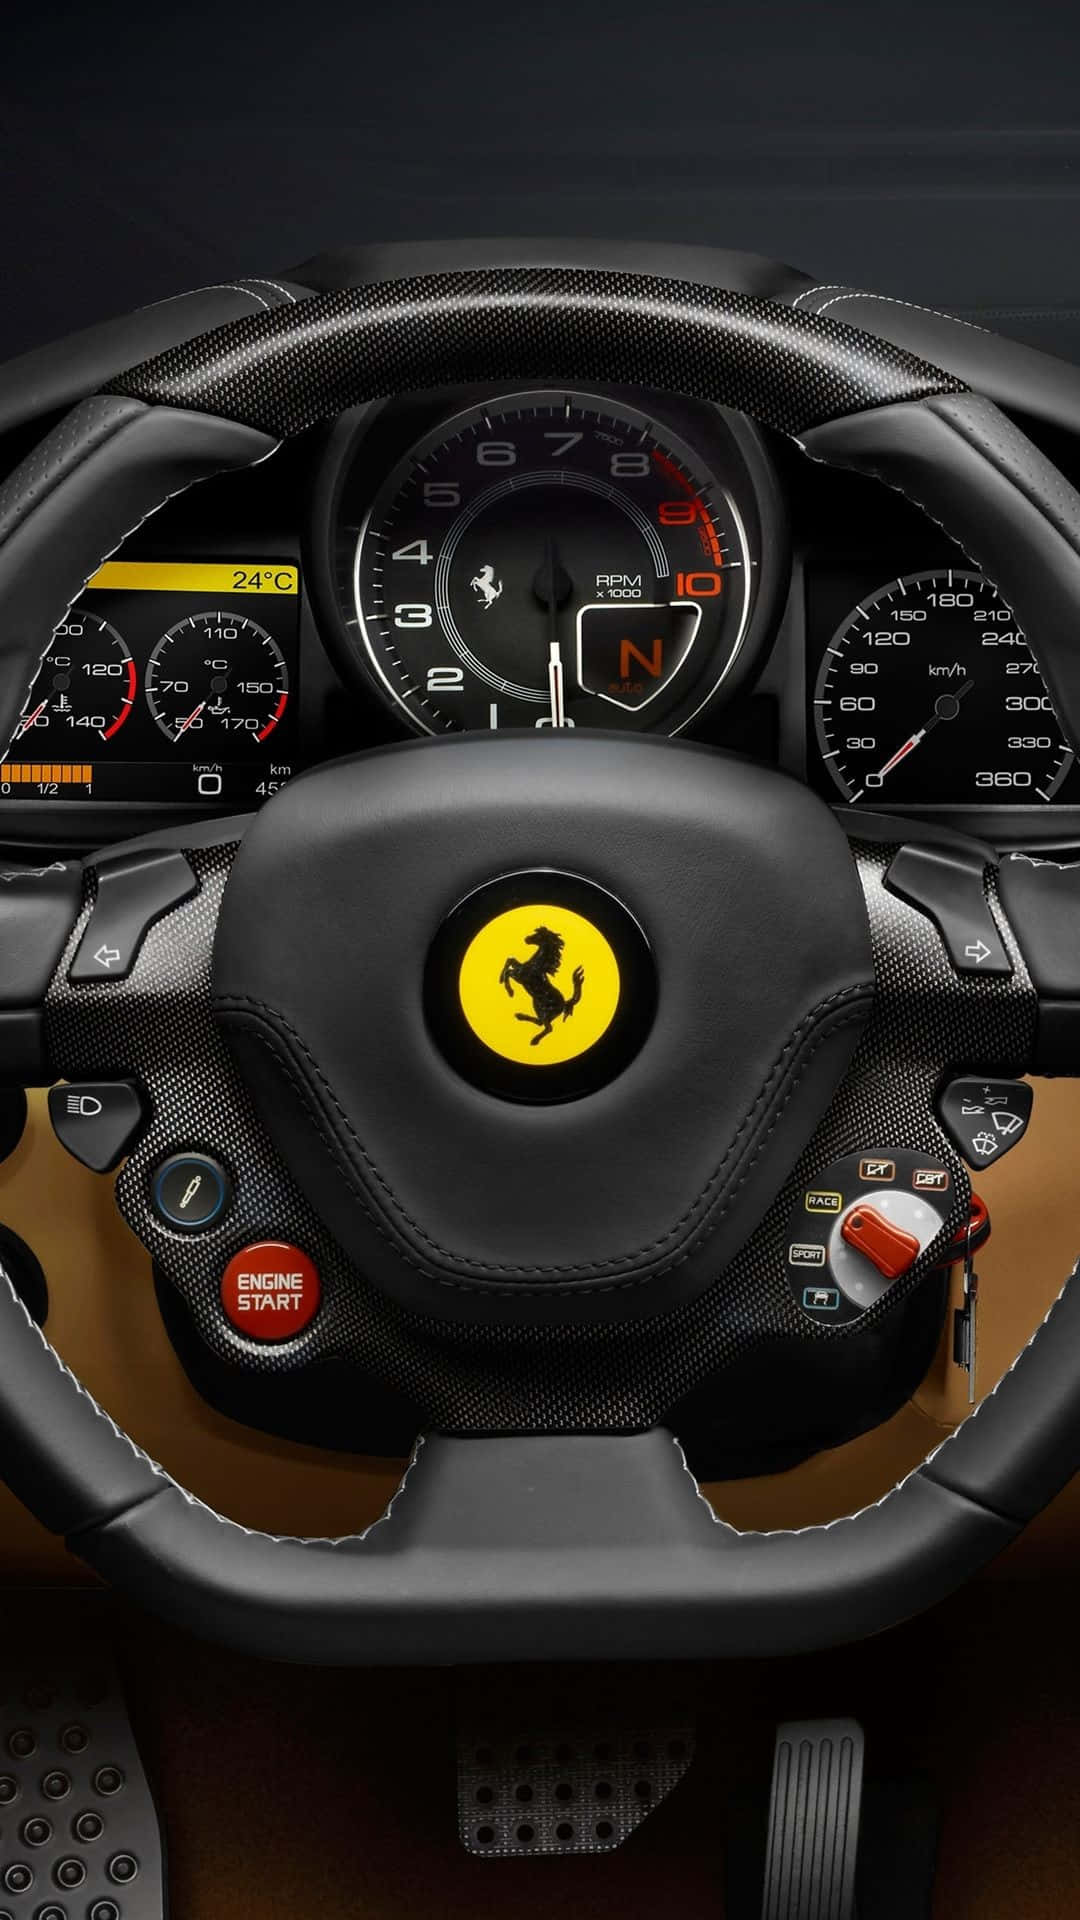 The sleek and stylish Ferrari Iphone X Wallpaper